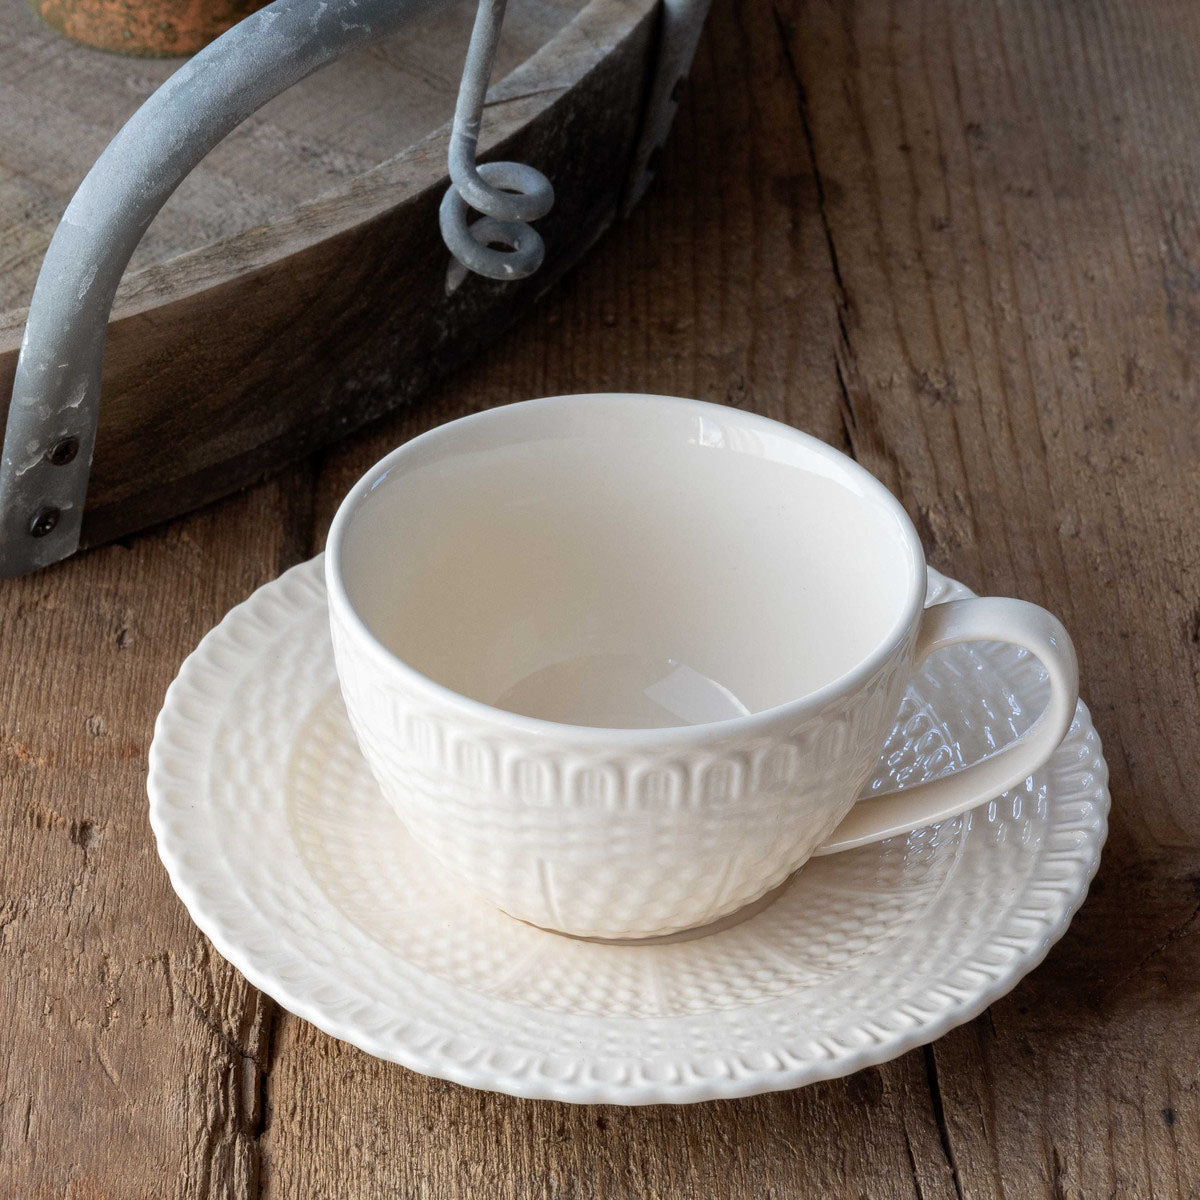 Creamware Basketweave Cup & Saucer Set